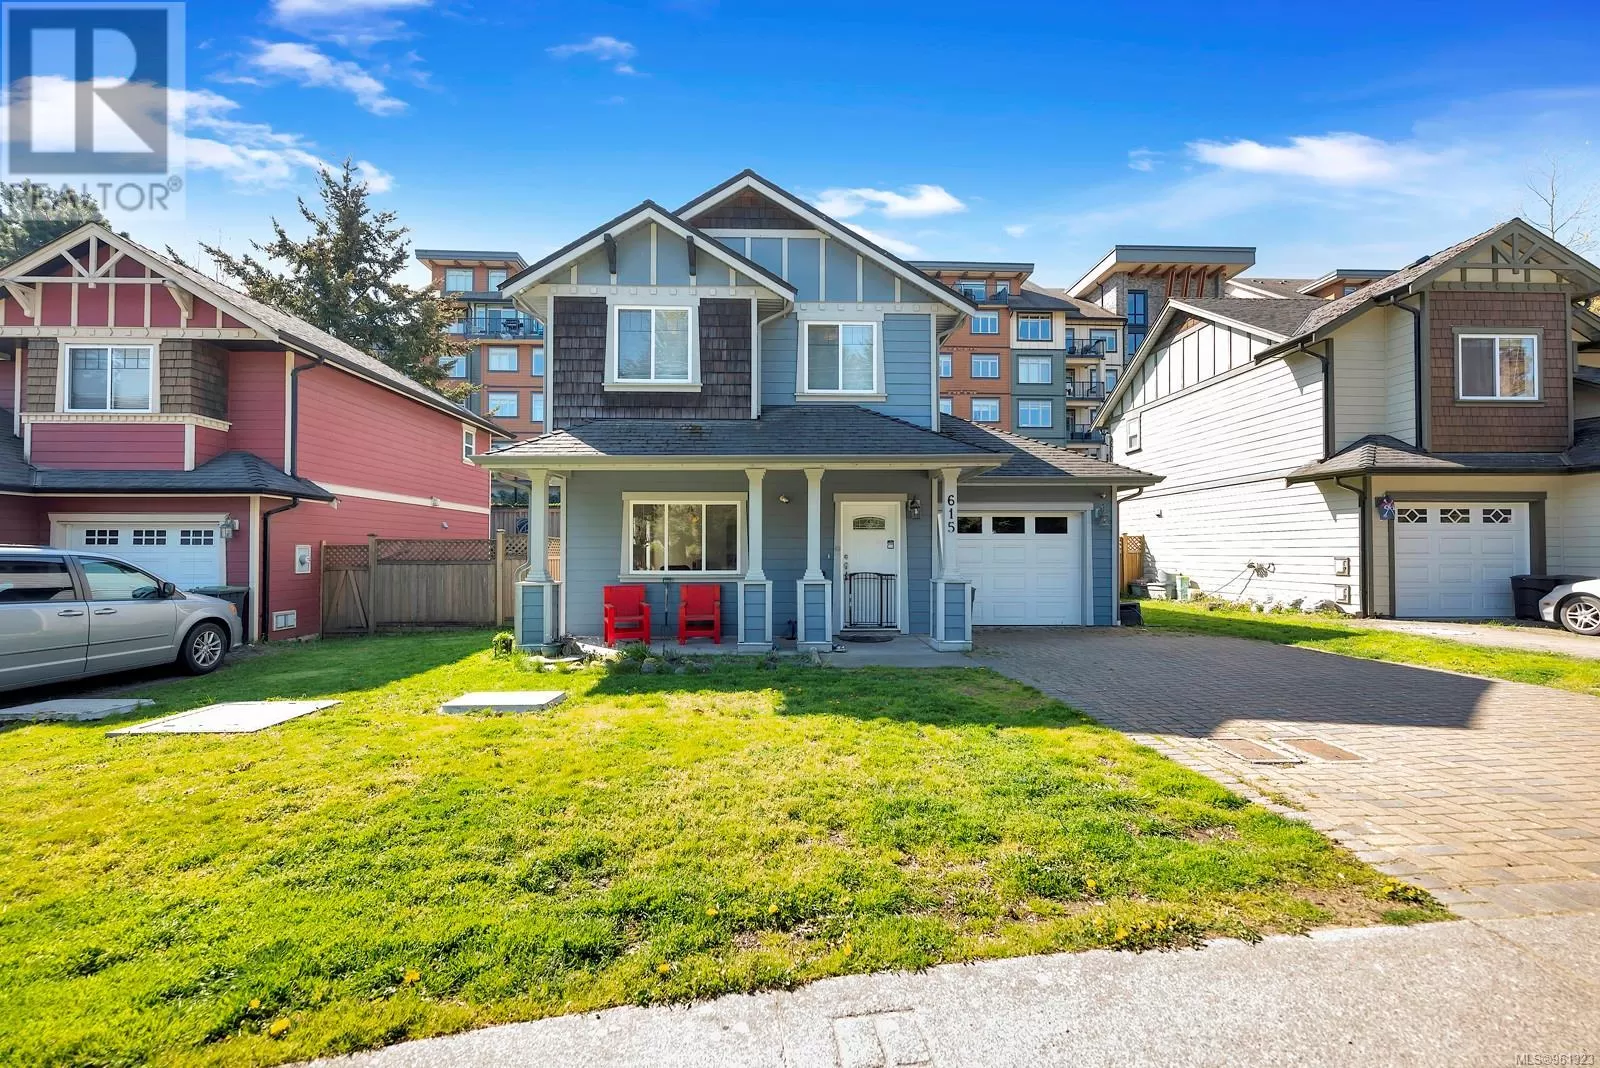 House for rent: 615 Treanor Ave, Langford, British Columbia V9B 3H6